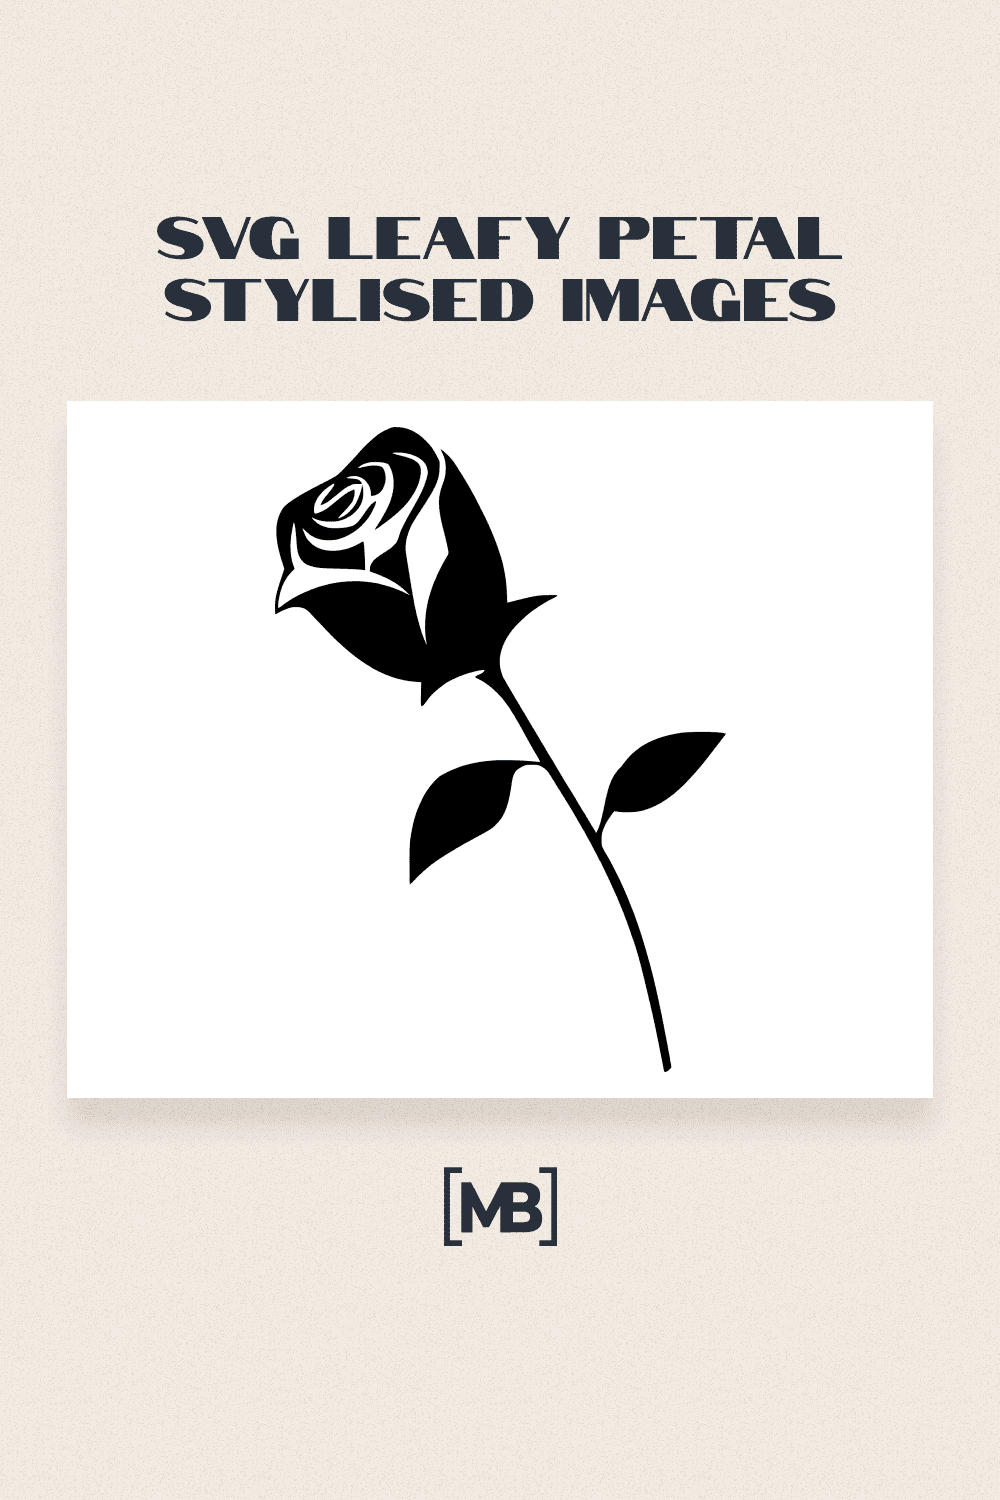 SVG leafy petal stylised images.